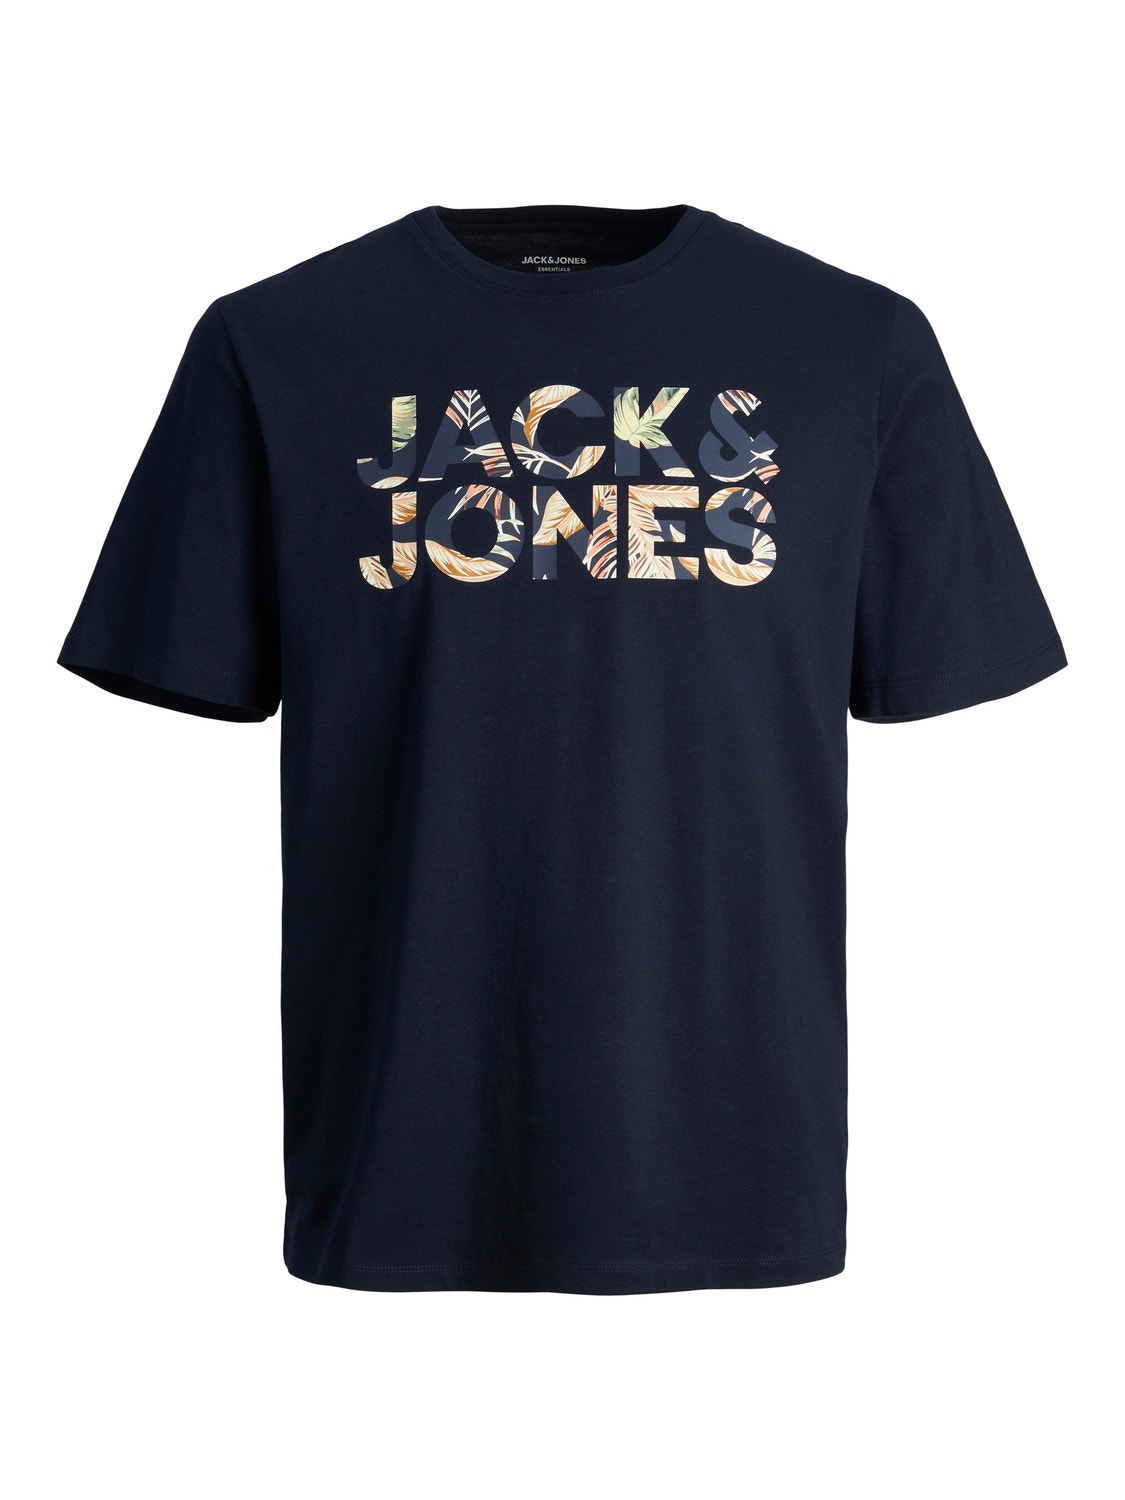 Jack & Jones T-shirt Stampato Per Bambino -Navy Blazer - 12250800